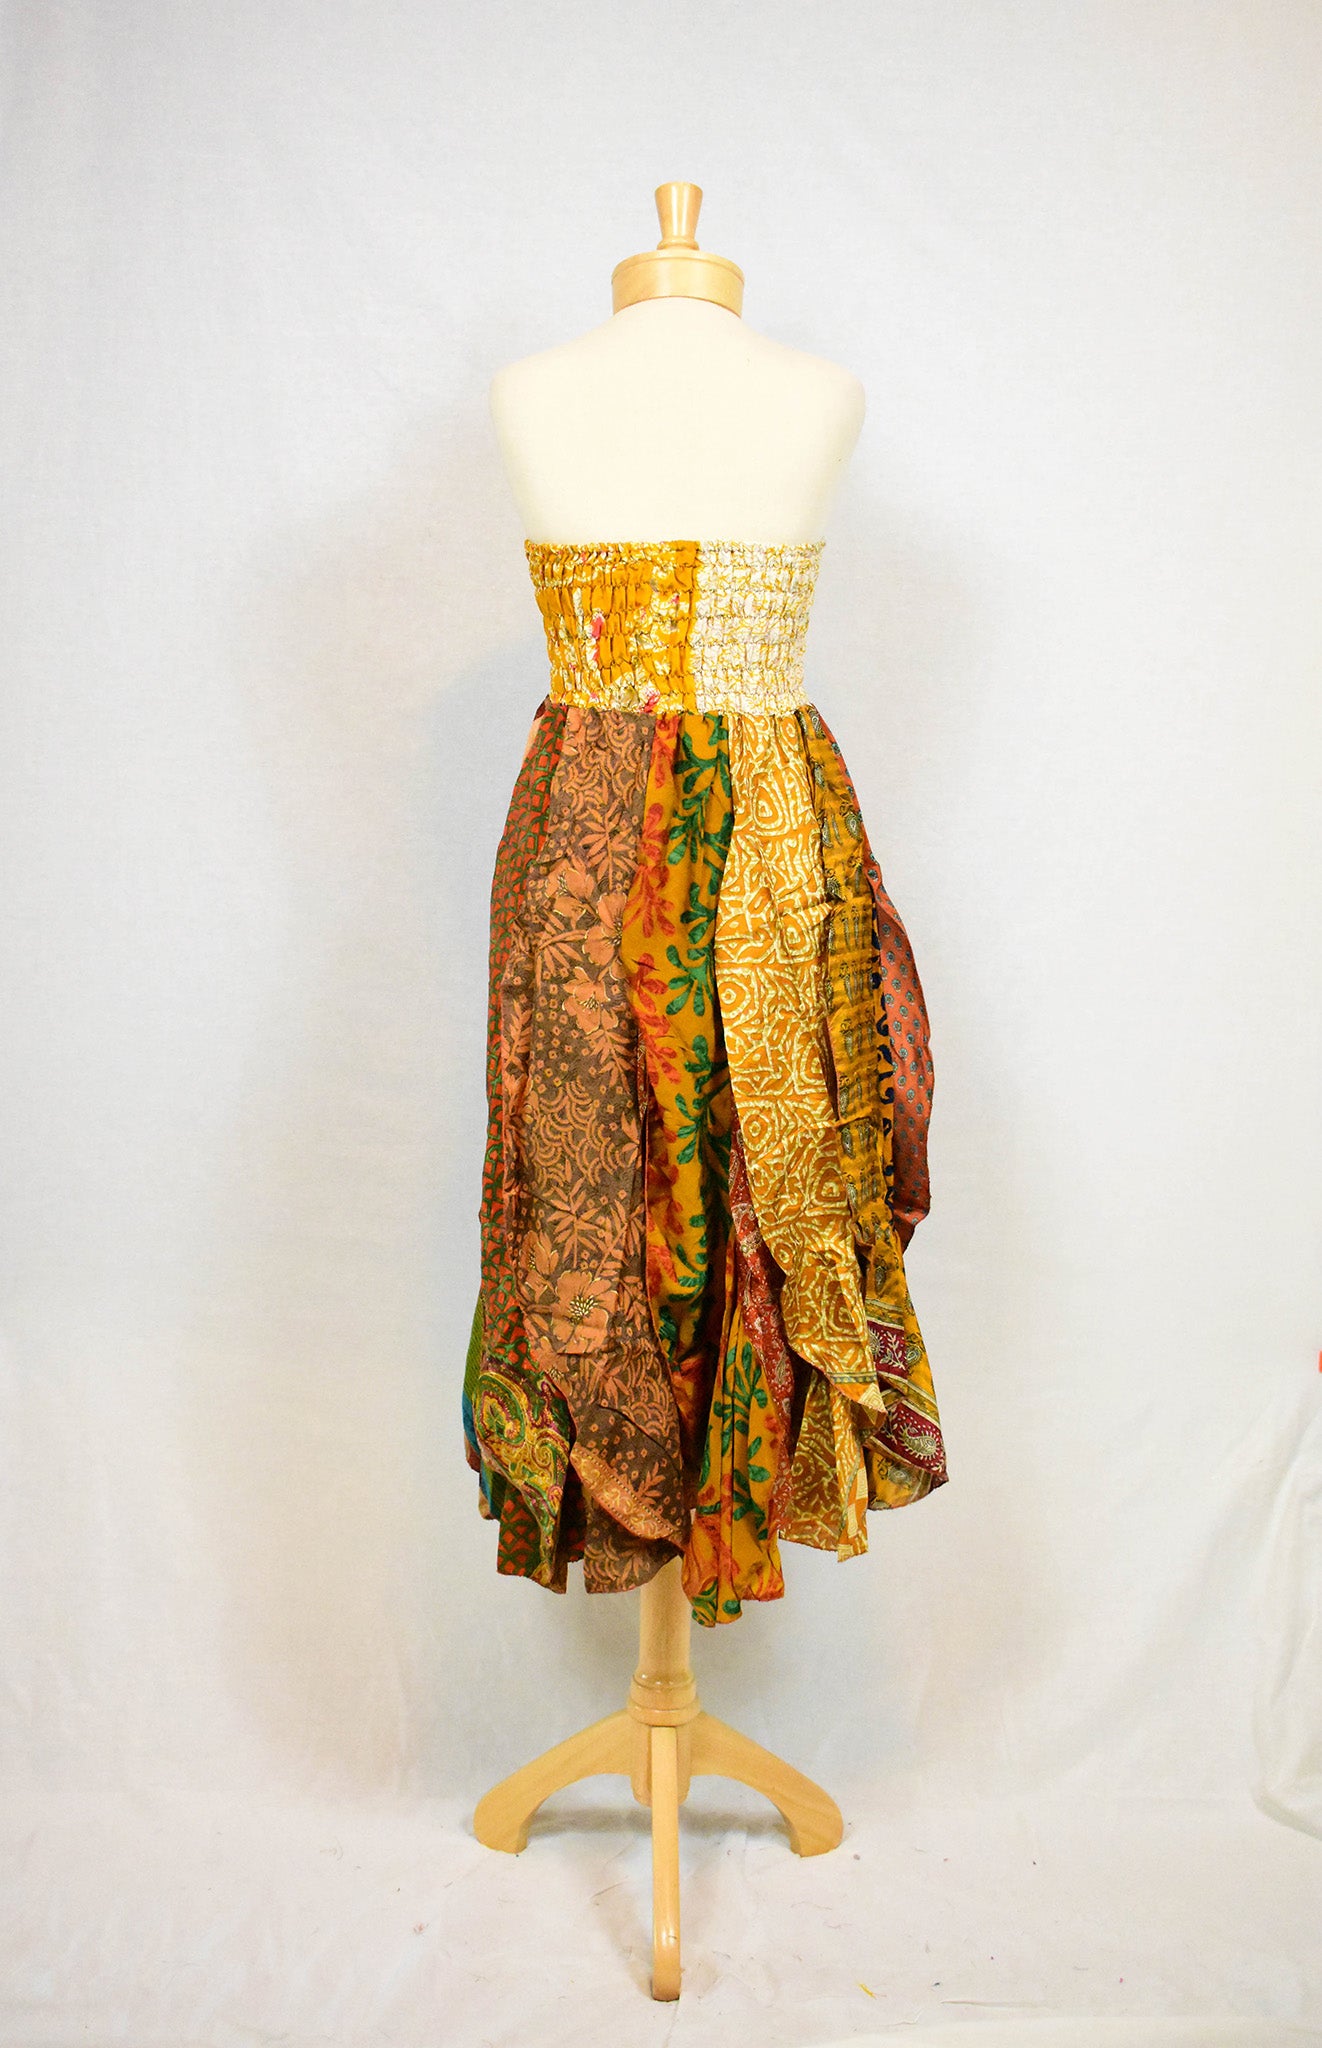 Fairy Dress Ruffle Skirt 8 Back View